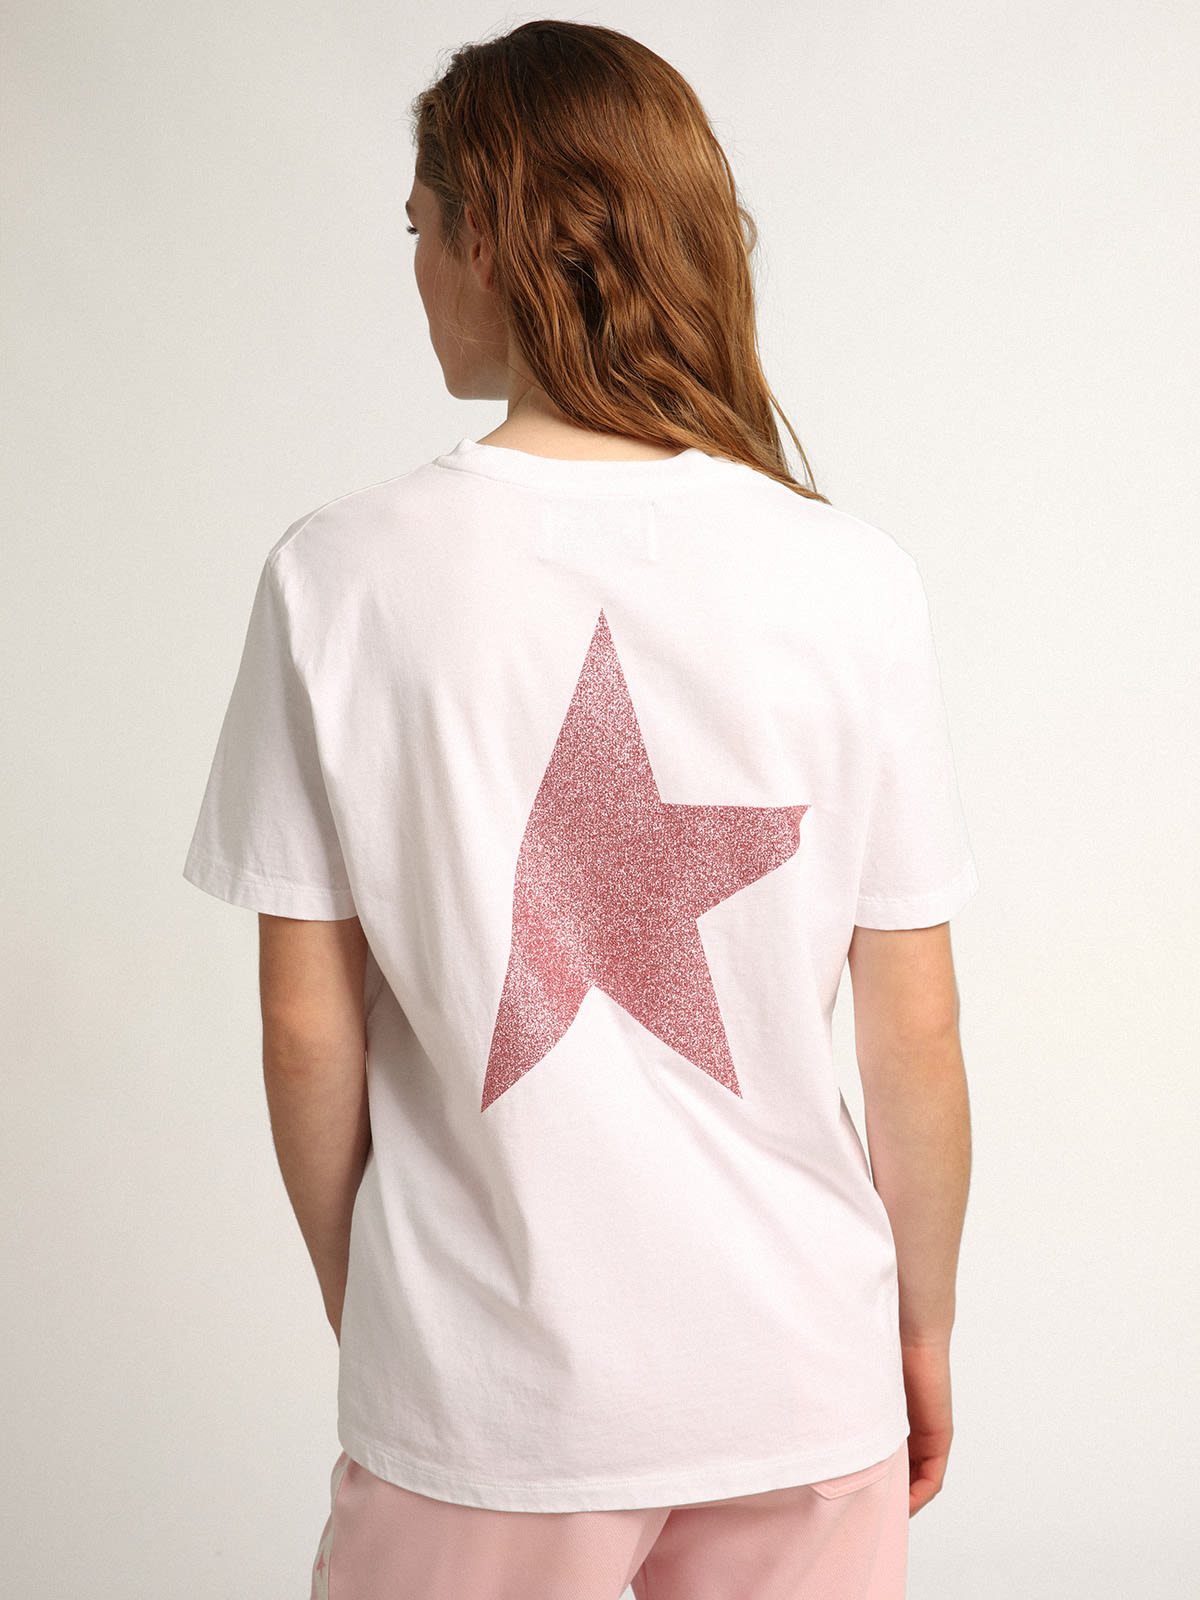 Golden Goose - Camiseta feminina branca com logo e estrela de glitter rosa in 